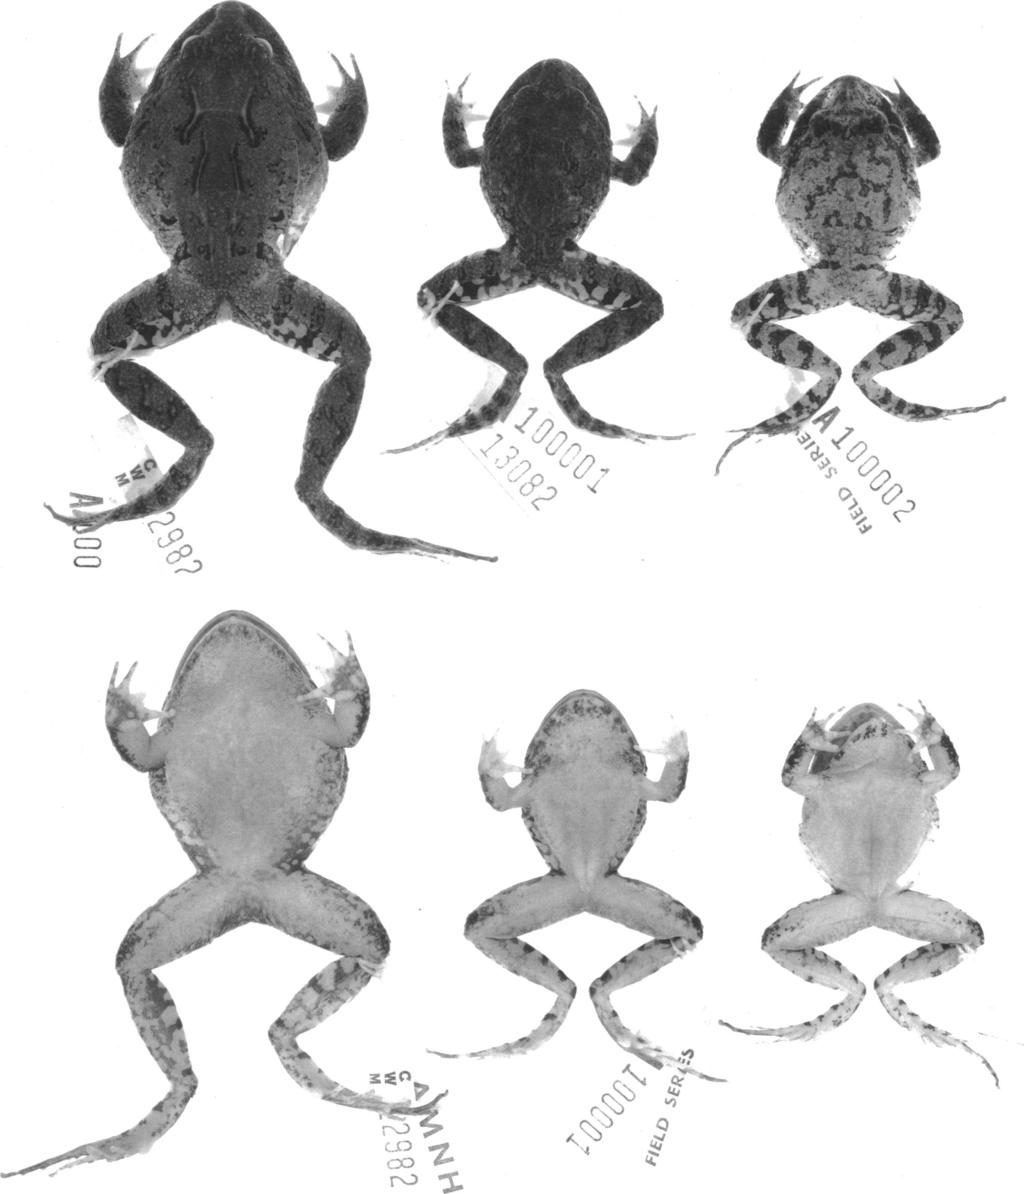 1997 MYERS AND LYNCH: CERRO TACARCUNA 7 0*riqx sa(a n., ~~~A.- -,'' te-c,11".1 vl. It v If _7-6 :' f N k 0-0 t I I. Fig. 4. Eleutherodactylus laticorpus, new species.